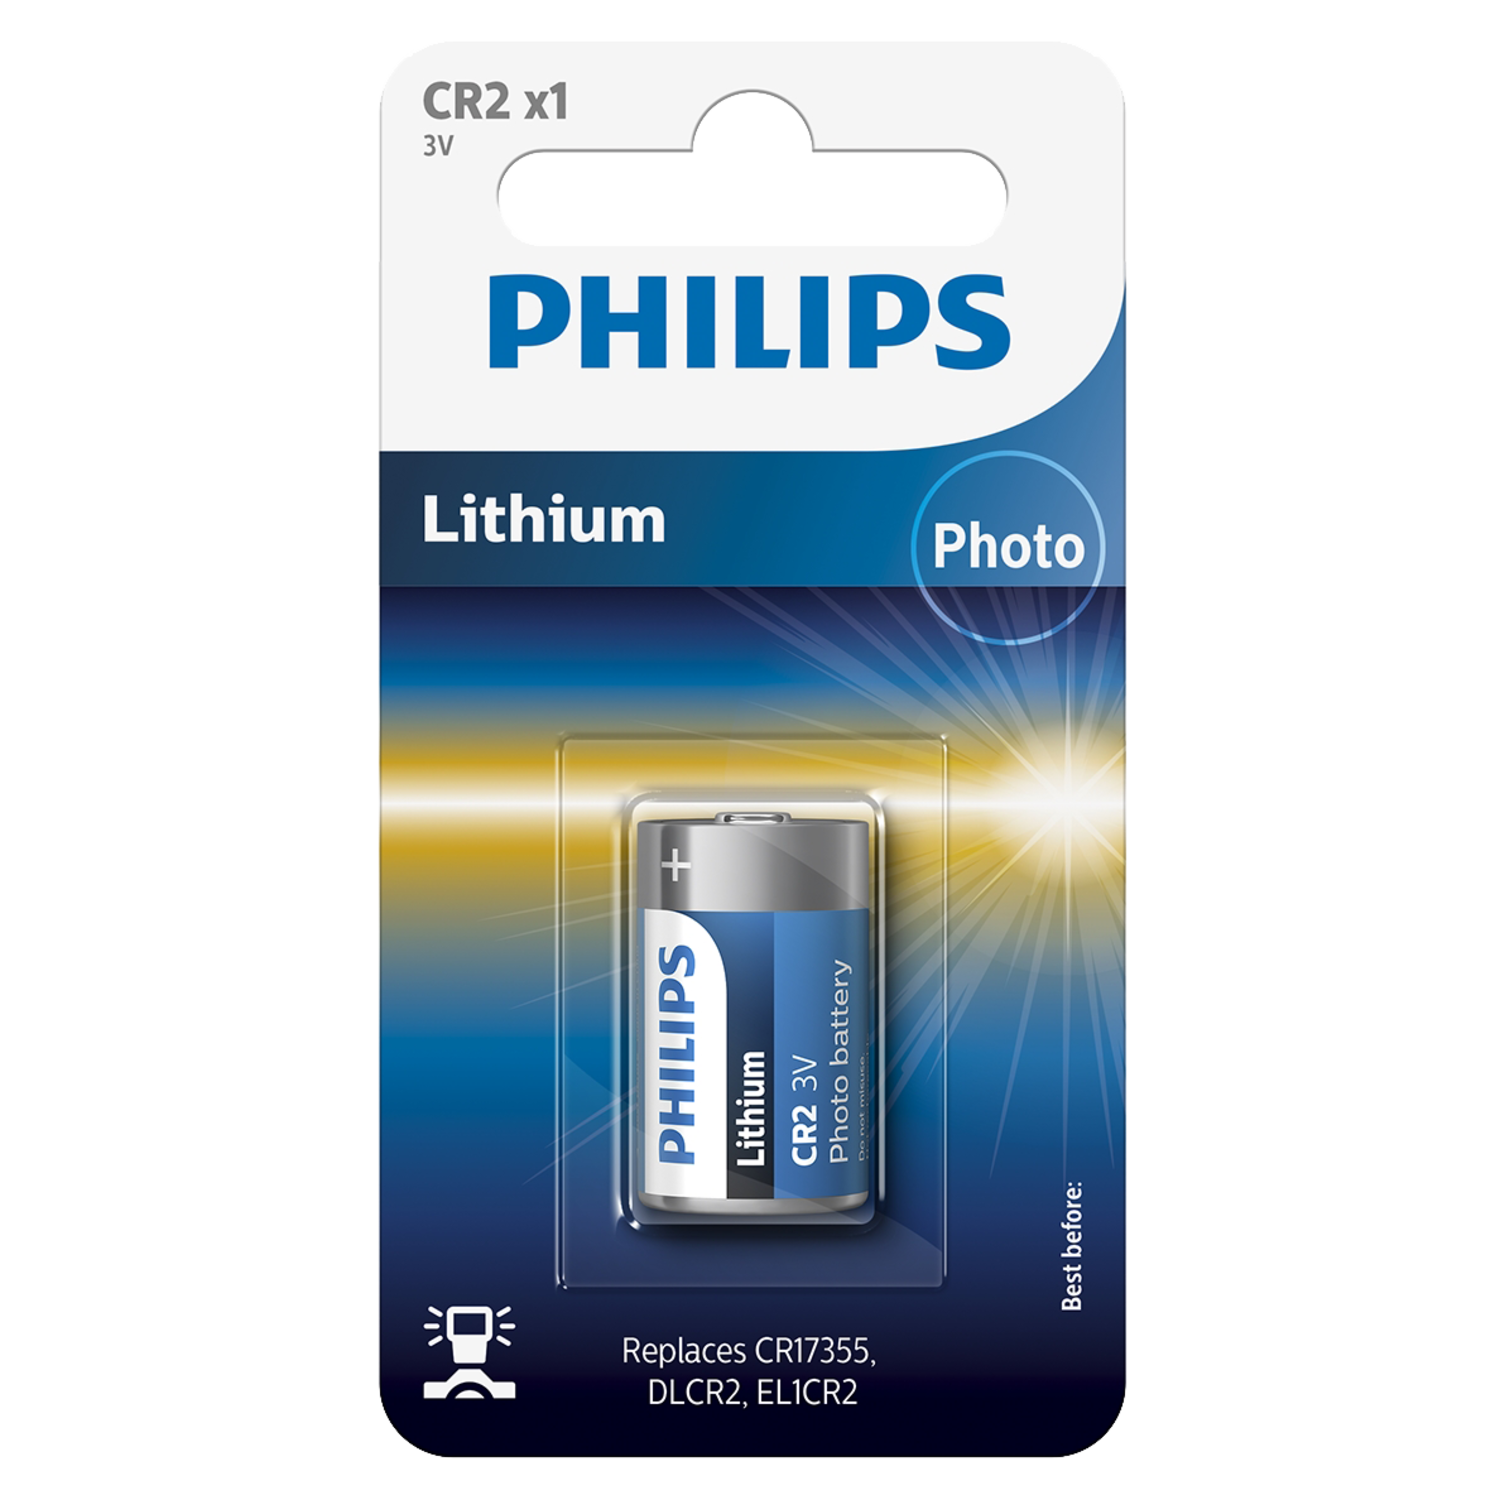 Ligegyldighed metallisk ekstremister Philips fotolithium CR2 batteri 1 stk.